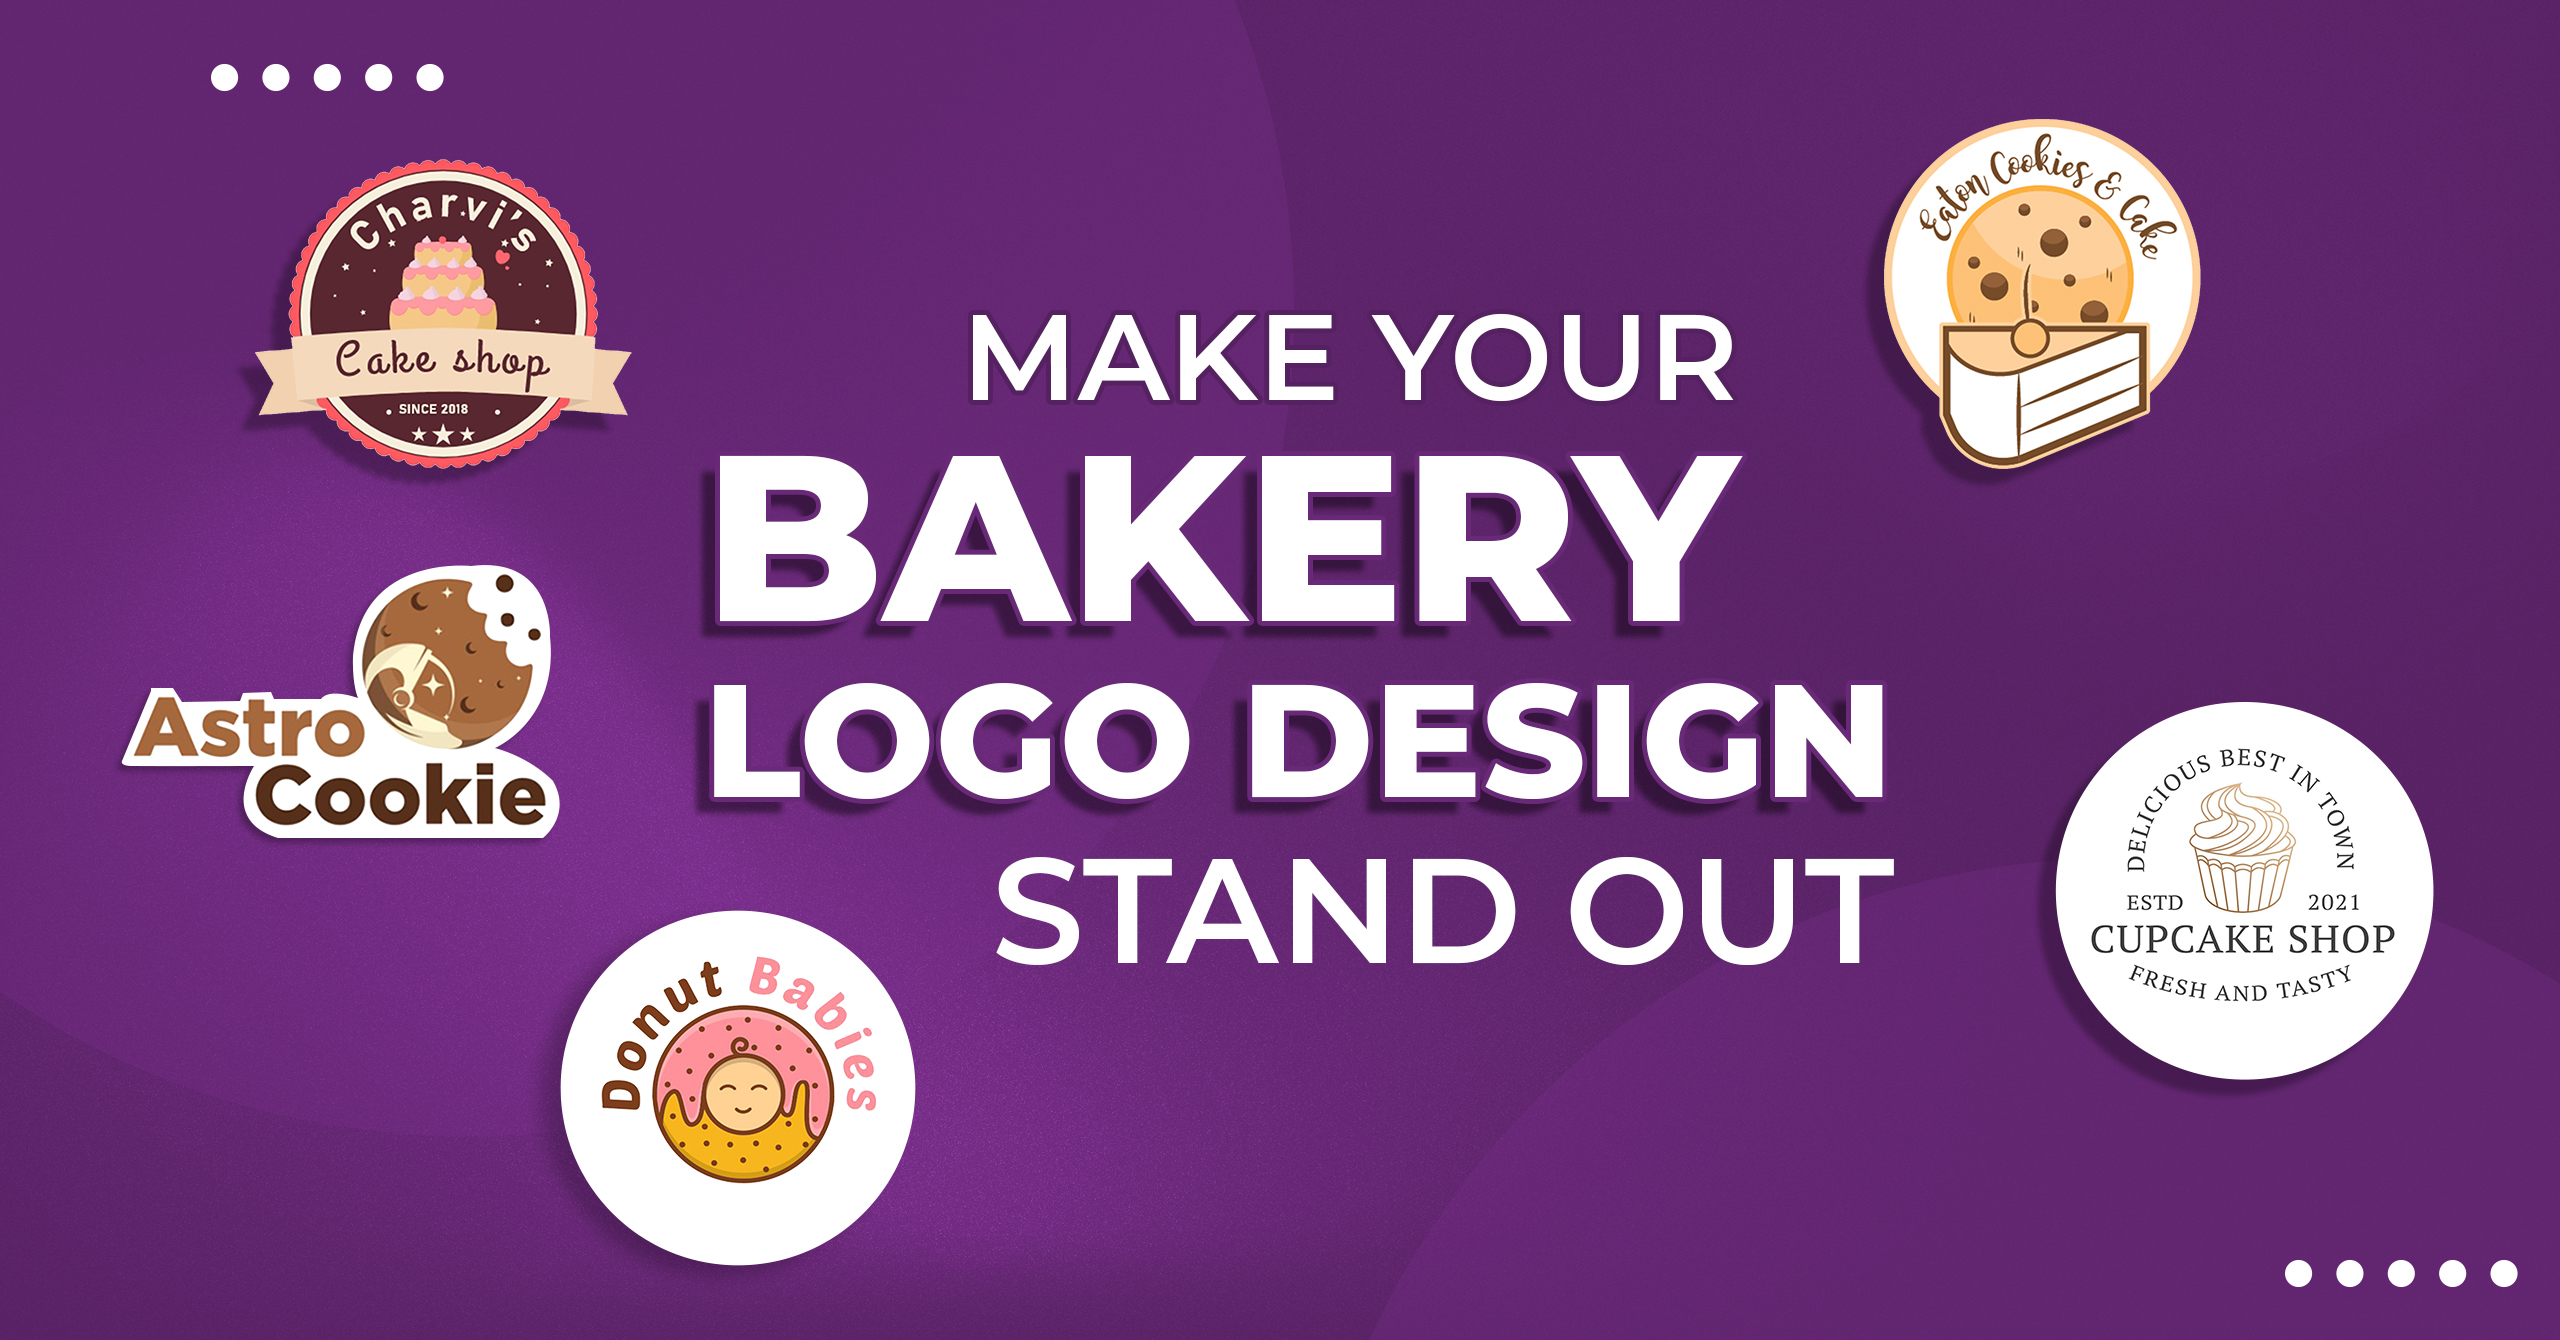 Cake shop logo template design Royalty Free Vector Image